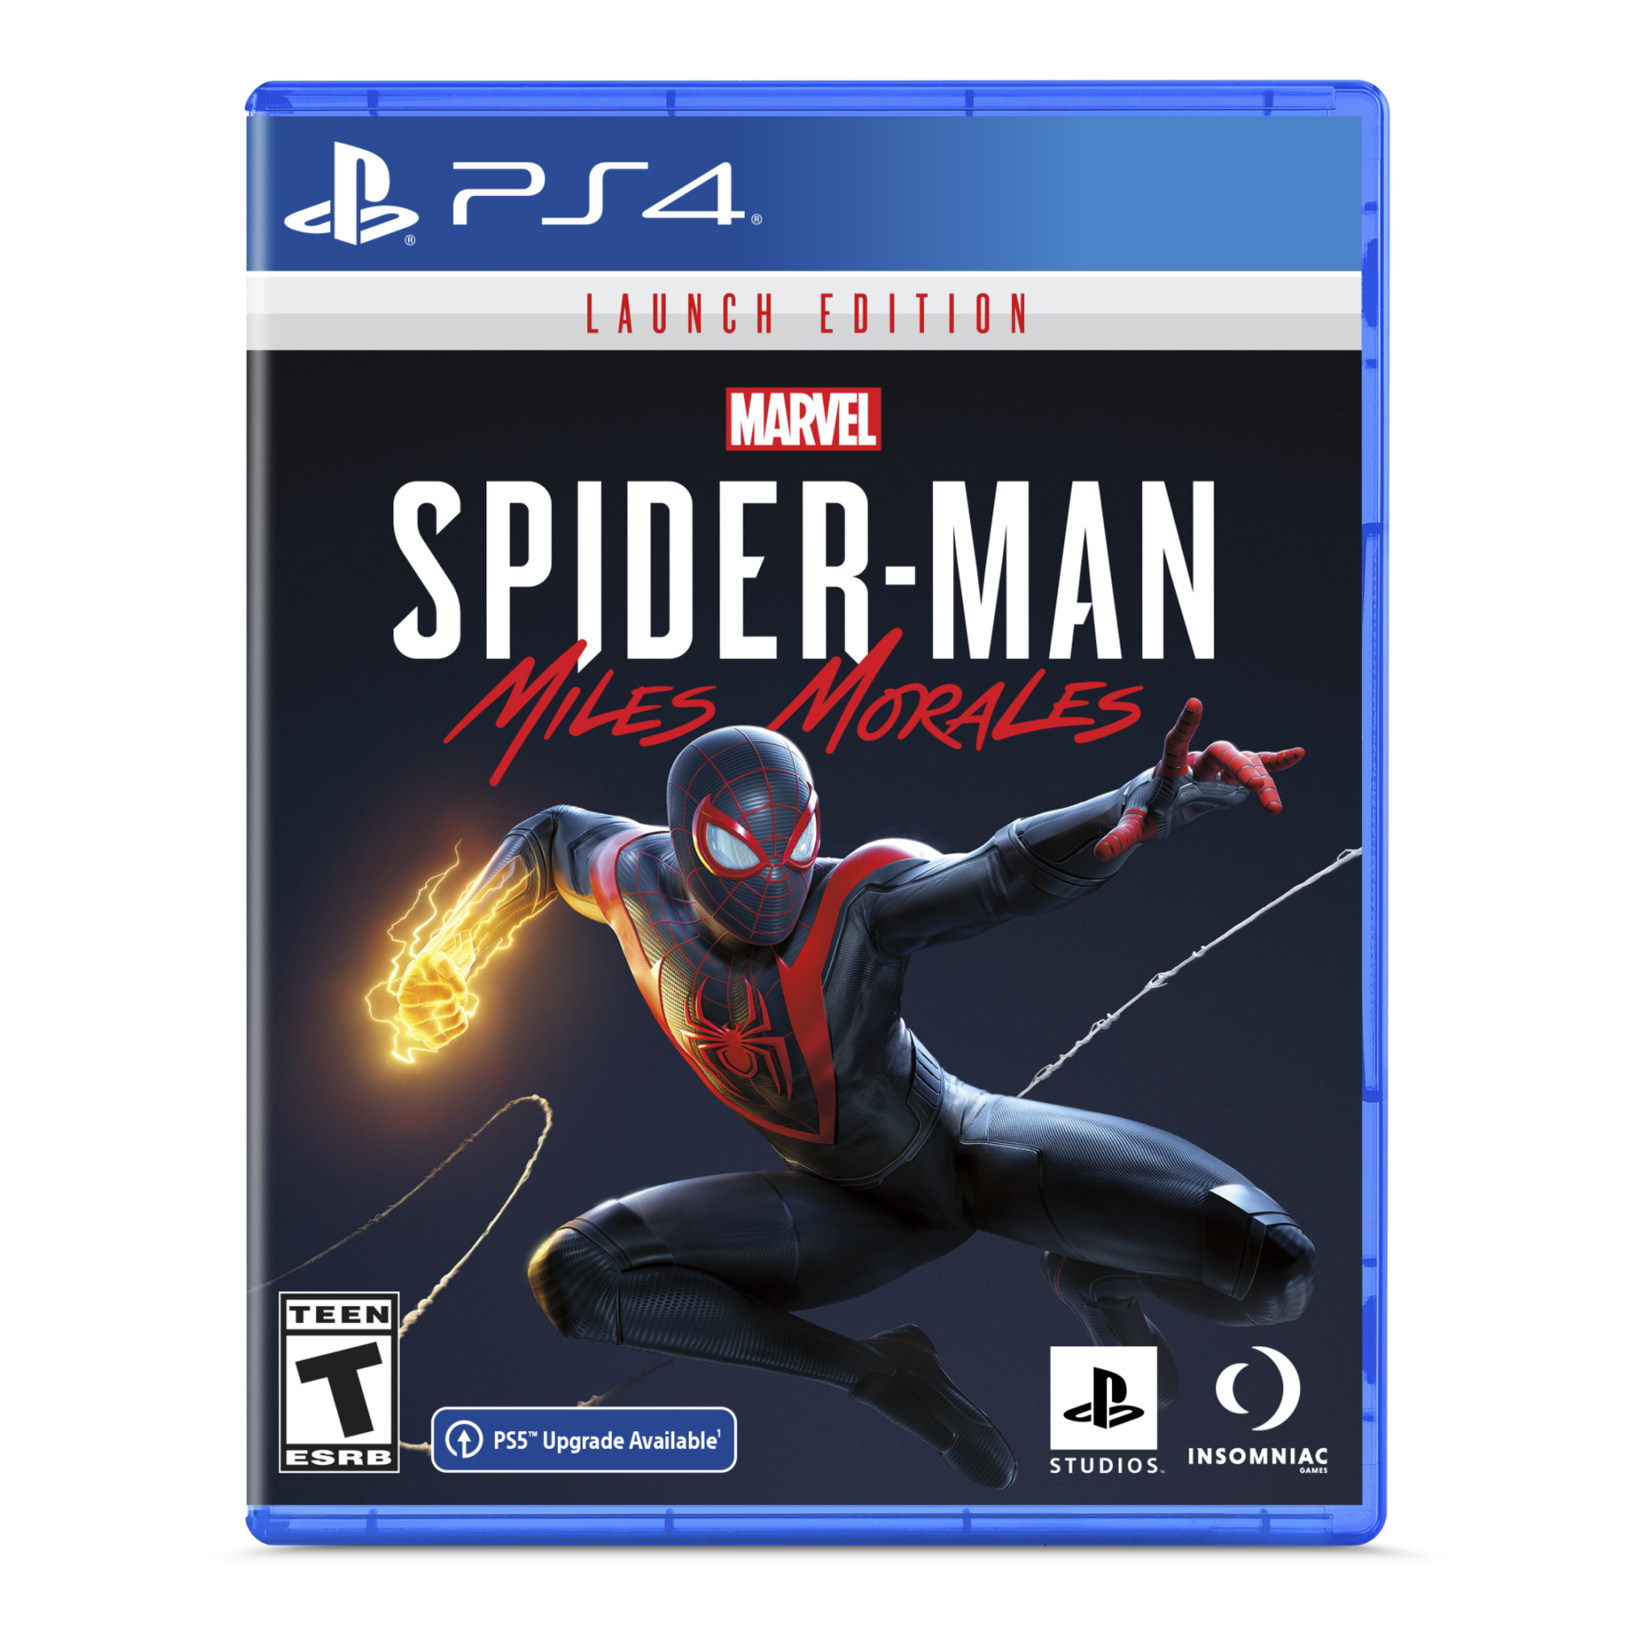 PS4U-Marvel's Spider-Man: Miles Morales